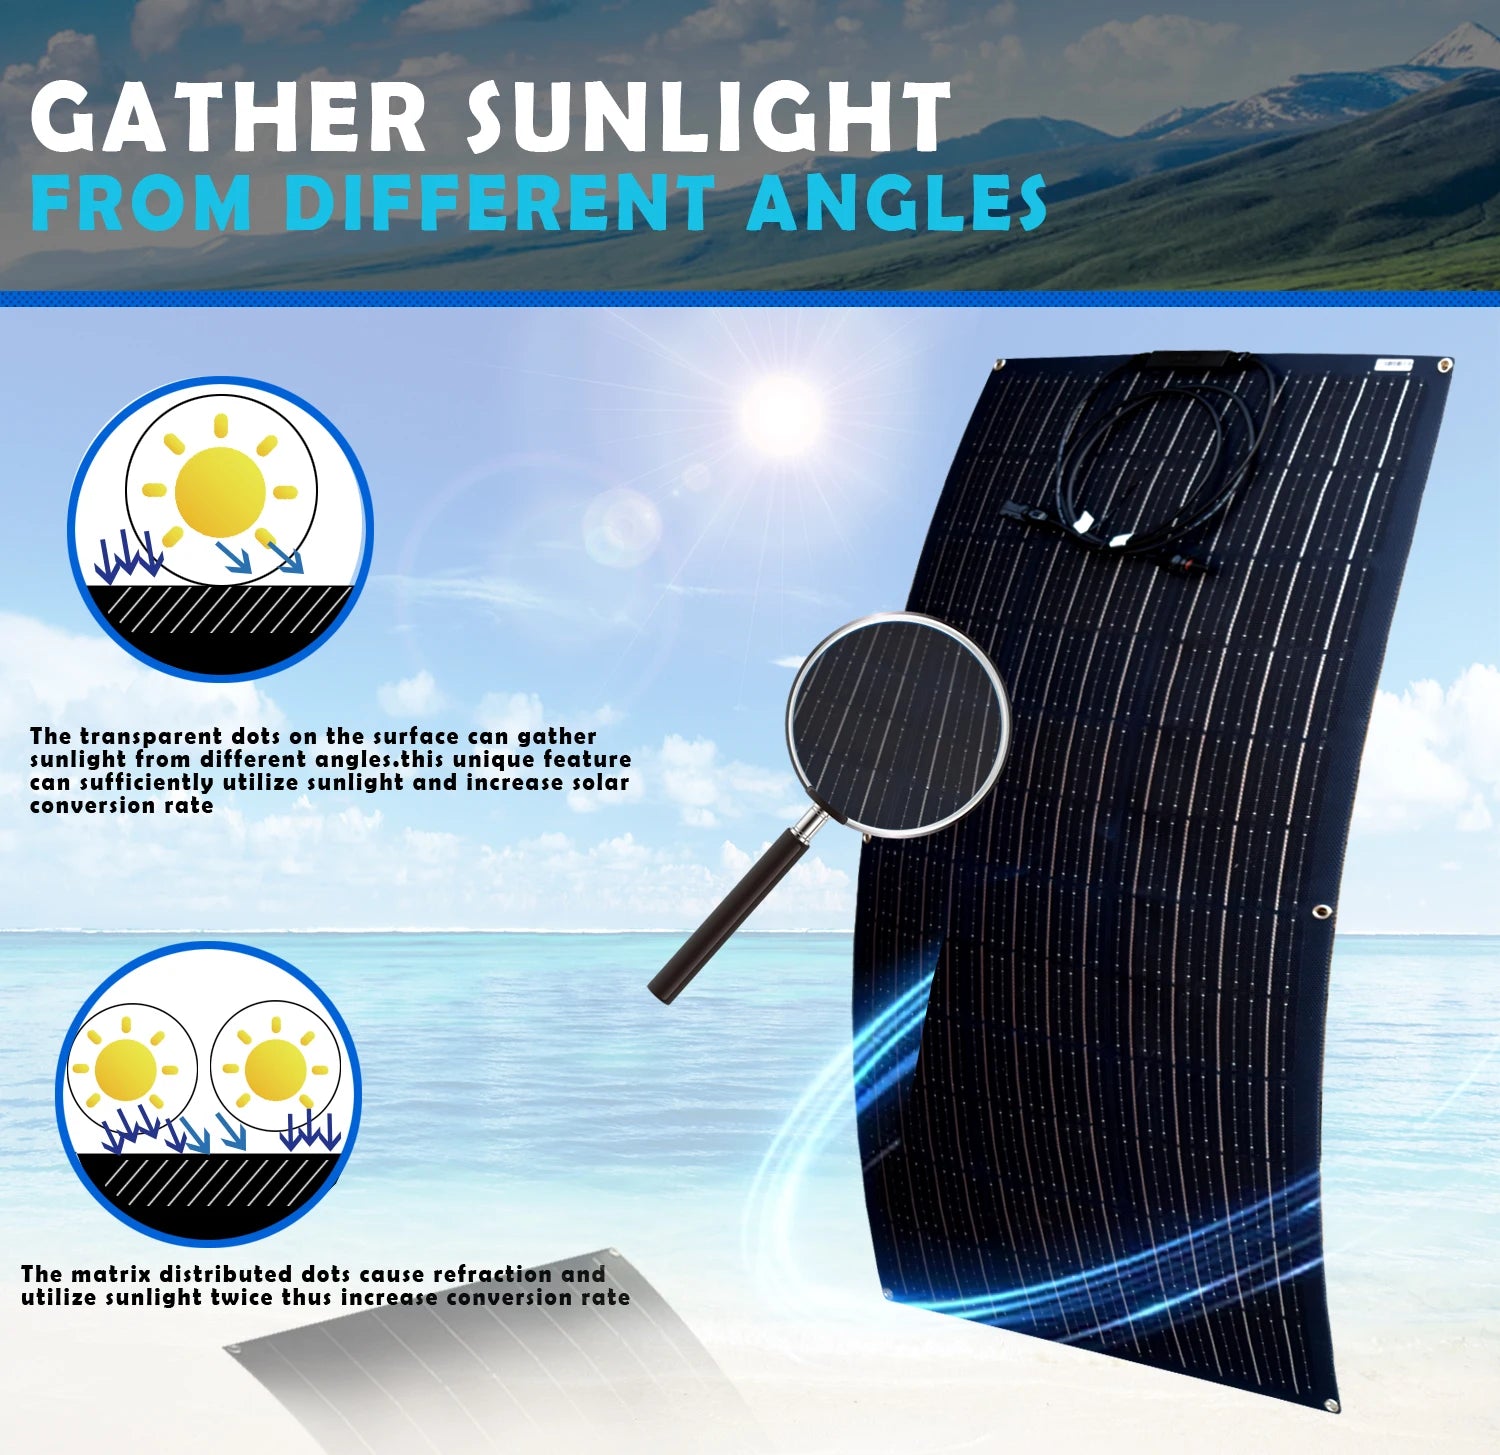 JINGYANG long lasting Semi Flexible solar panel, Optimal sunlight gathering via unique transparent dot patterns for increased solar conversion.